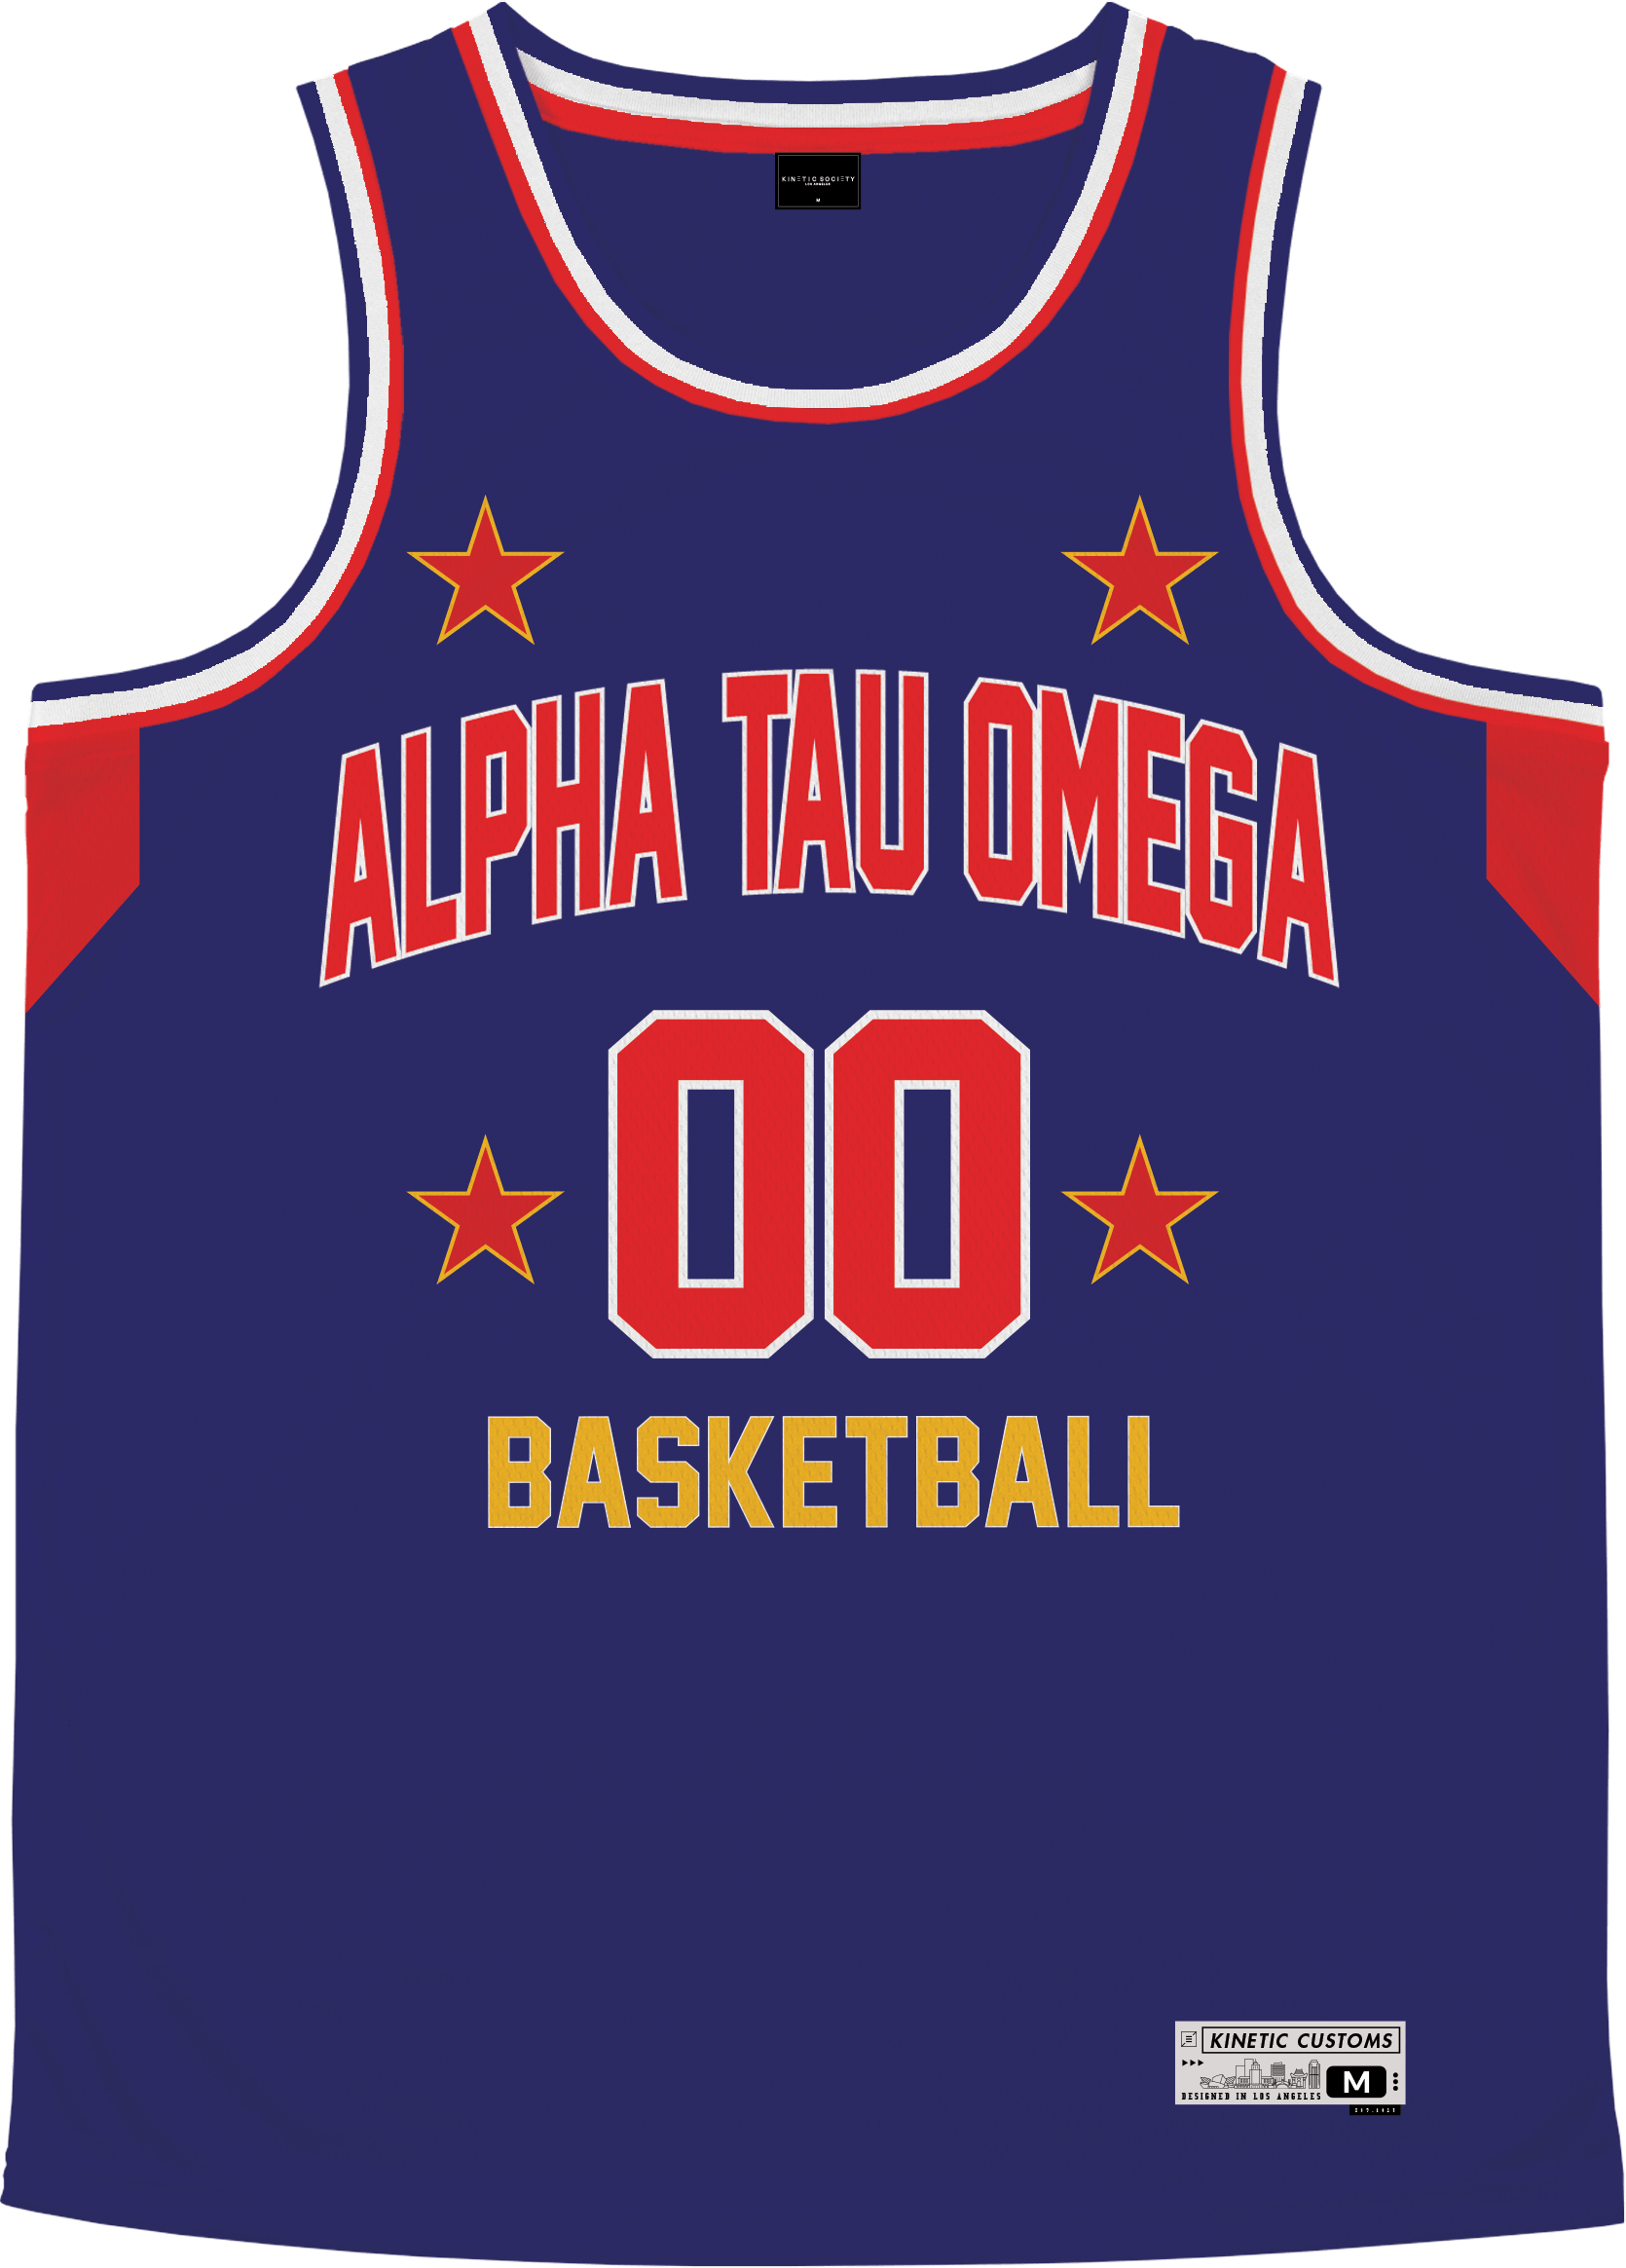 Alpha Tau Omega - Retro Ballers Basketball Jersey - Kinetic Society